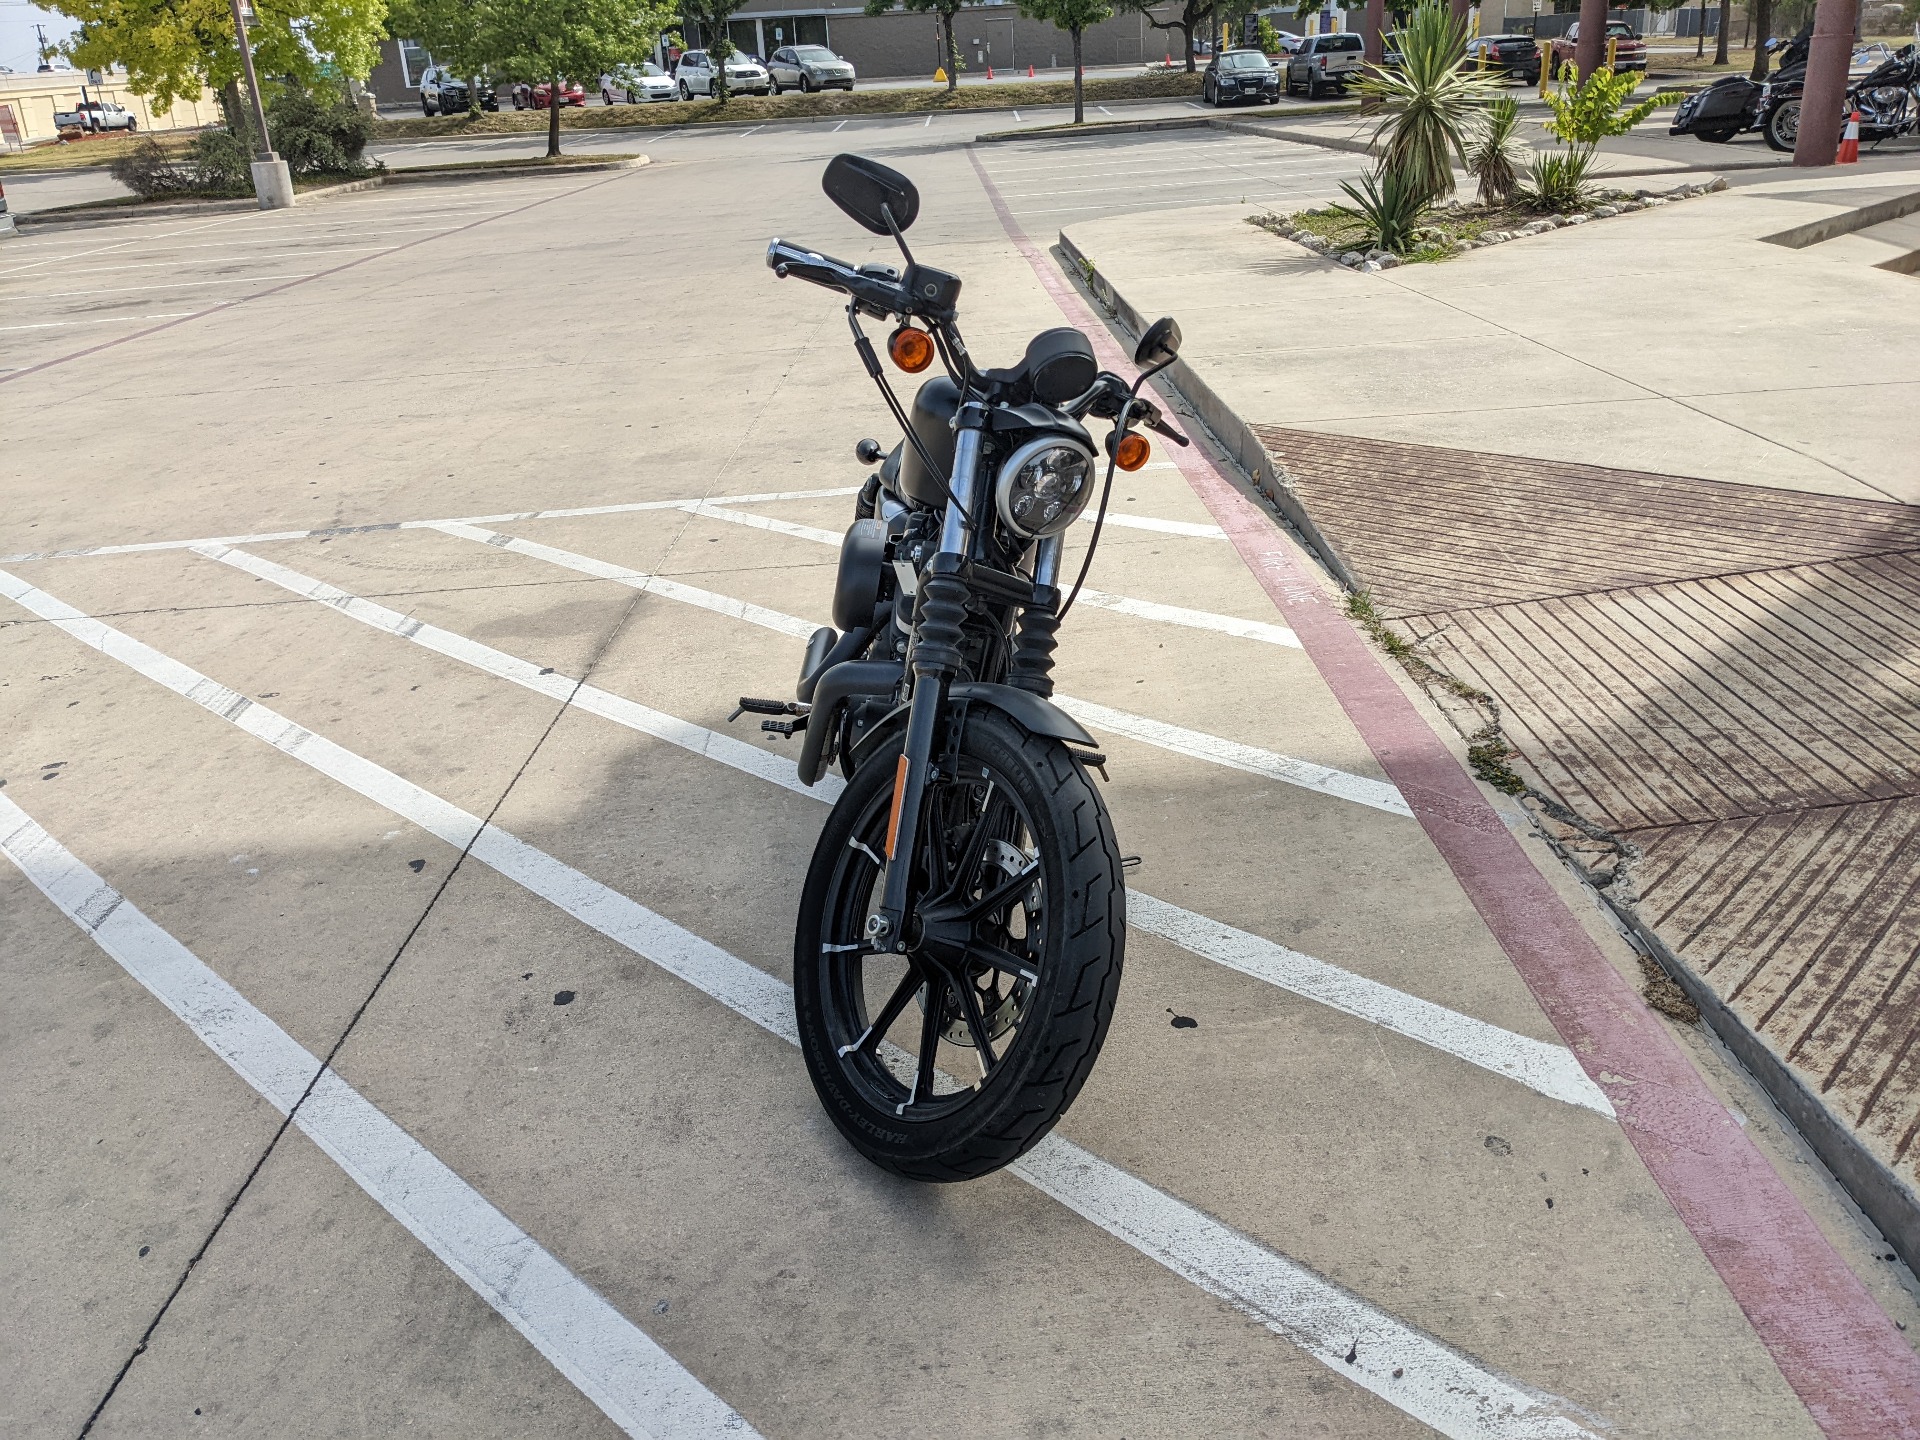 2016 Harley-Davidson Iron 883™ in San Antonio, Texas - Photo 3